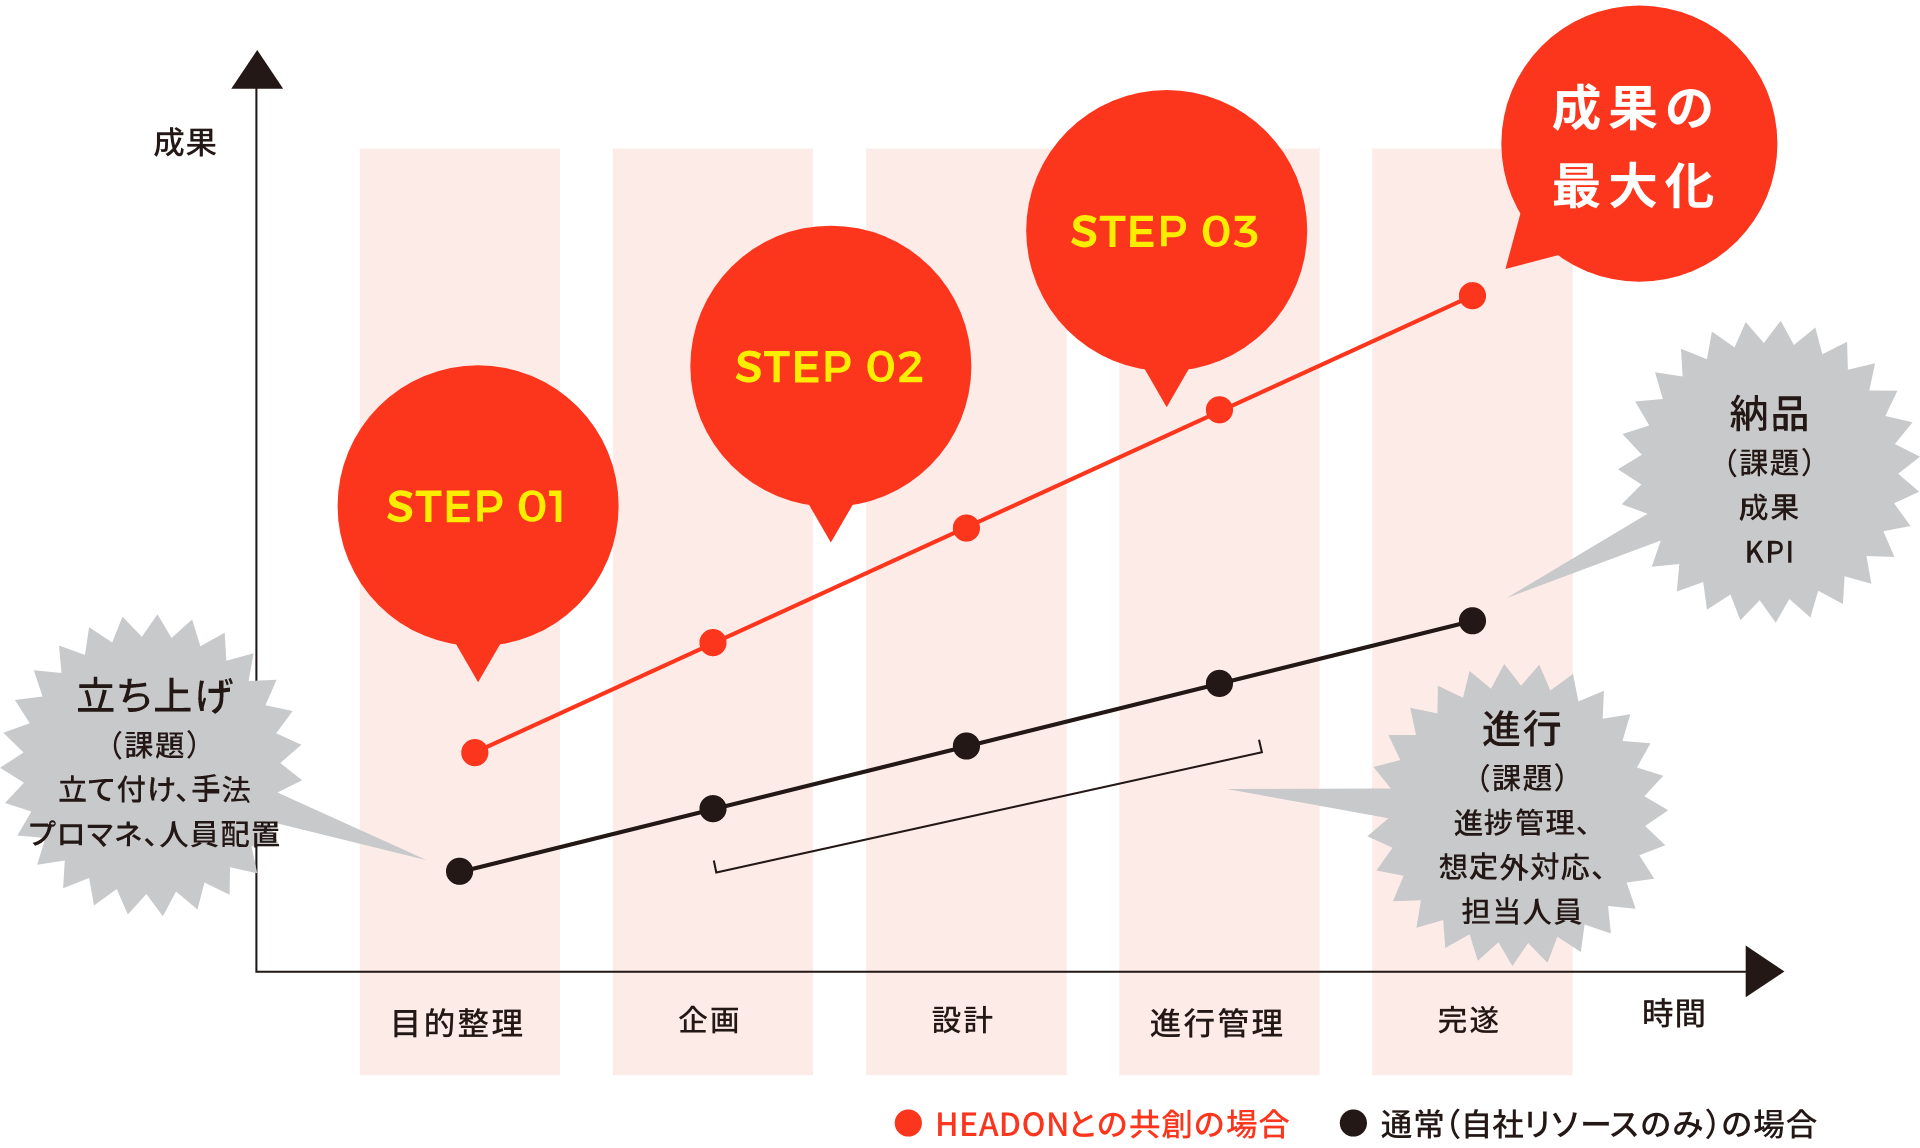 STEP01【目的整理】立ち上げ(課題) 立て付け、手法 プロマネ、人員配置 STEP02【企画〜設計】 STEP03【進行管理】進行(課題) 進捗管理、想定外対応、担当人員【完遂】納品(課題) 成果 KPI 通常(自社リソースのみ)の場合に比べ、HEADONとの共創の場合、成果は最大化される。